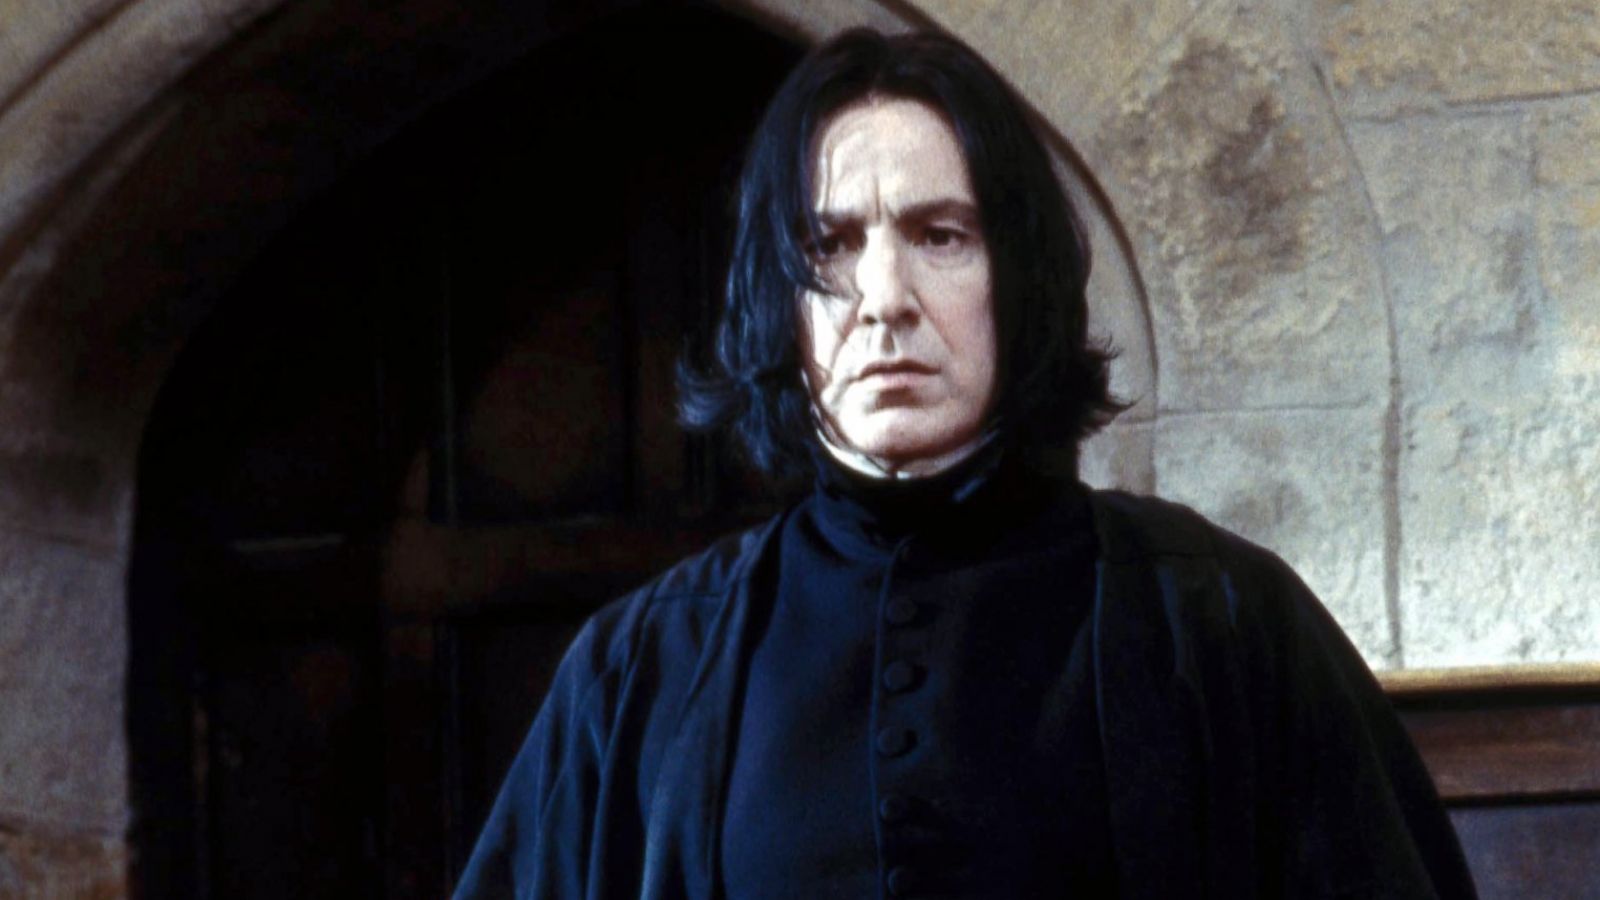 Beyond Snape: Alan Rickman's career straddled stage and film 